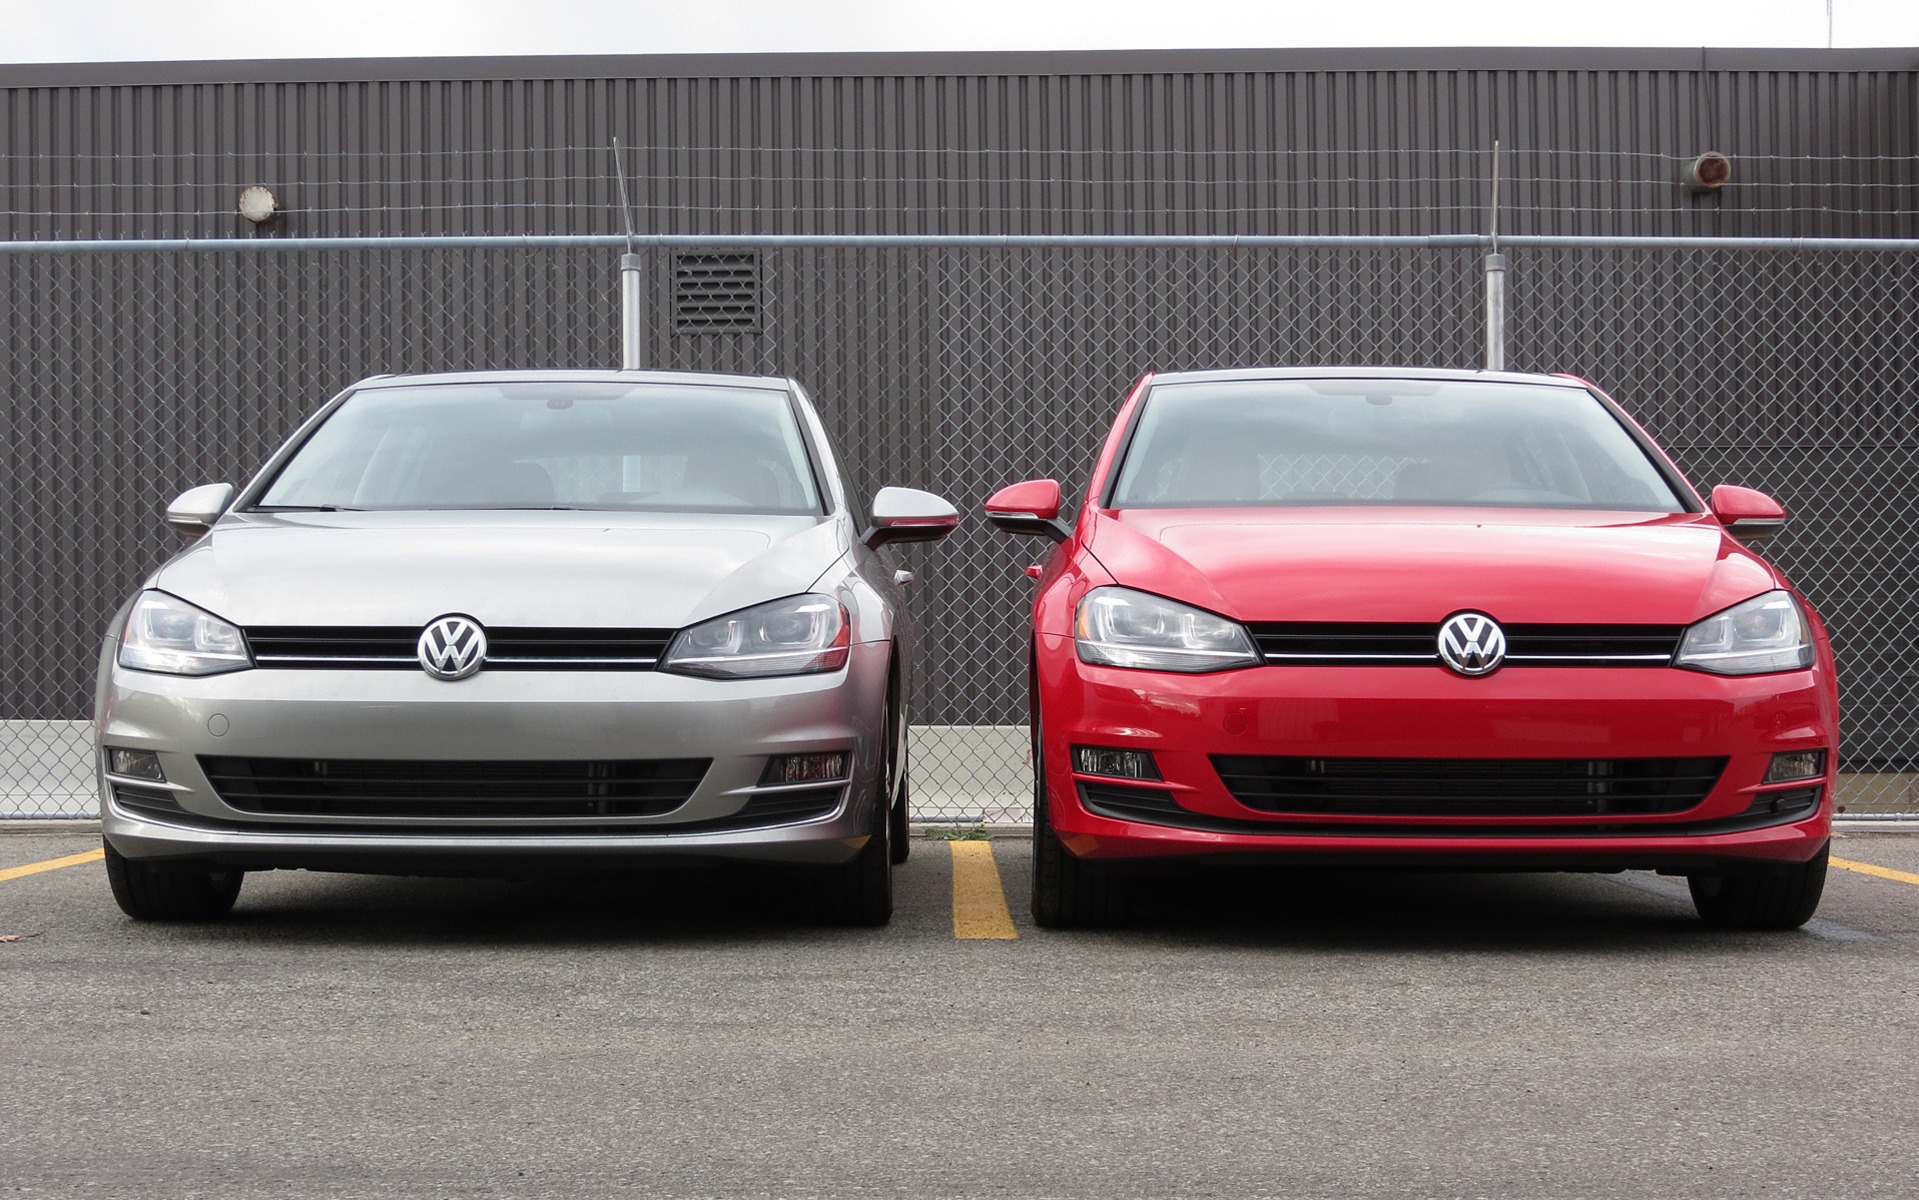 Volkswagen Golf TDI versus Golf TSI 2015: Two Tests Over 4,000 km